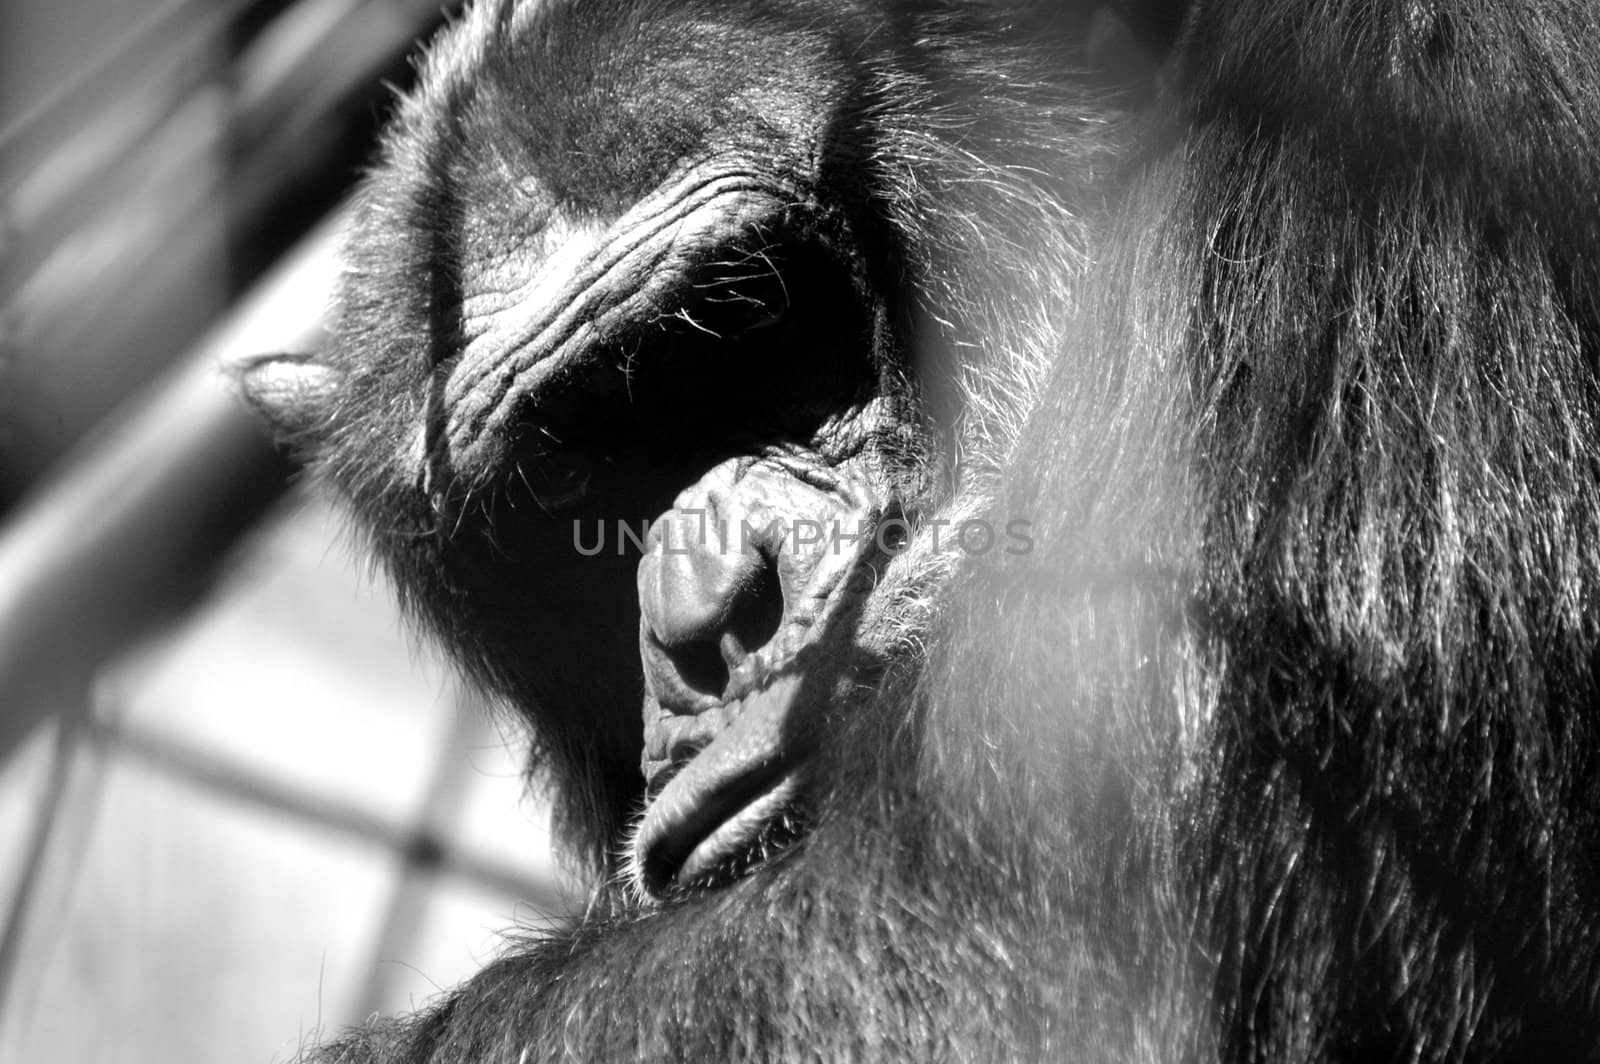 captive monkey by photochecker